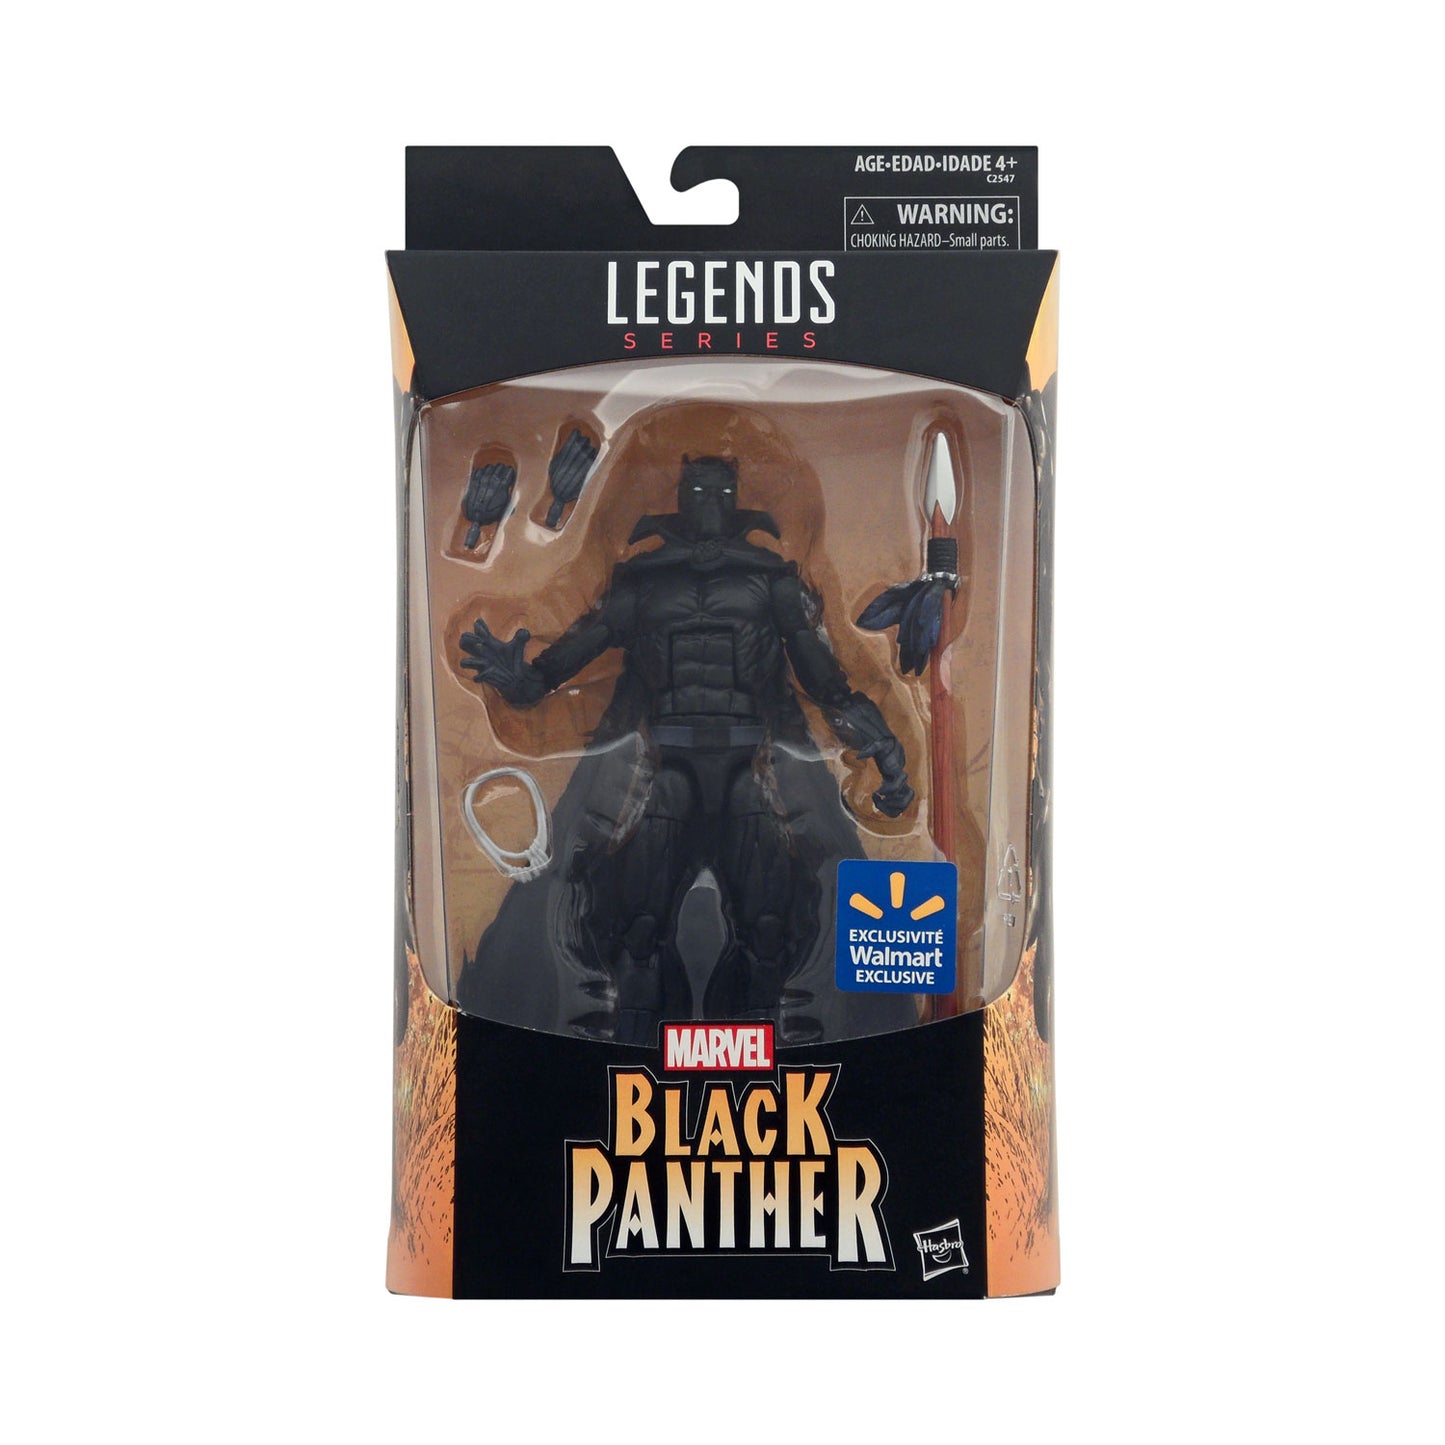 Marvel Legends Exclusive Black Panther 6-Inch Action Figure